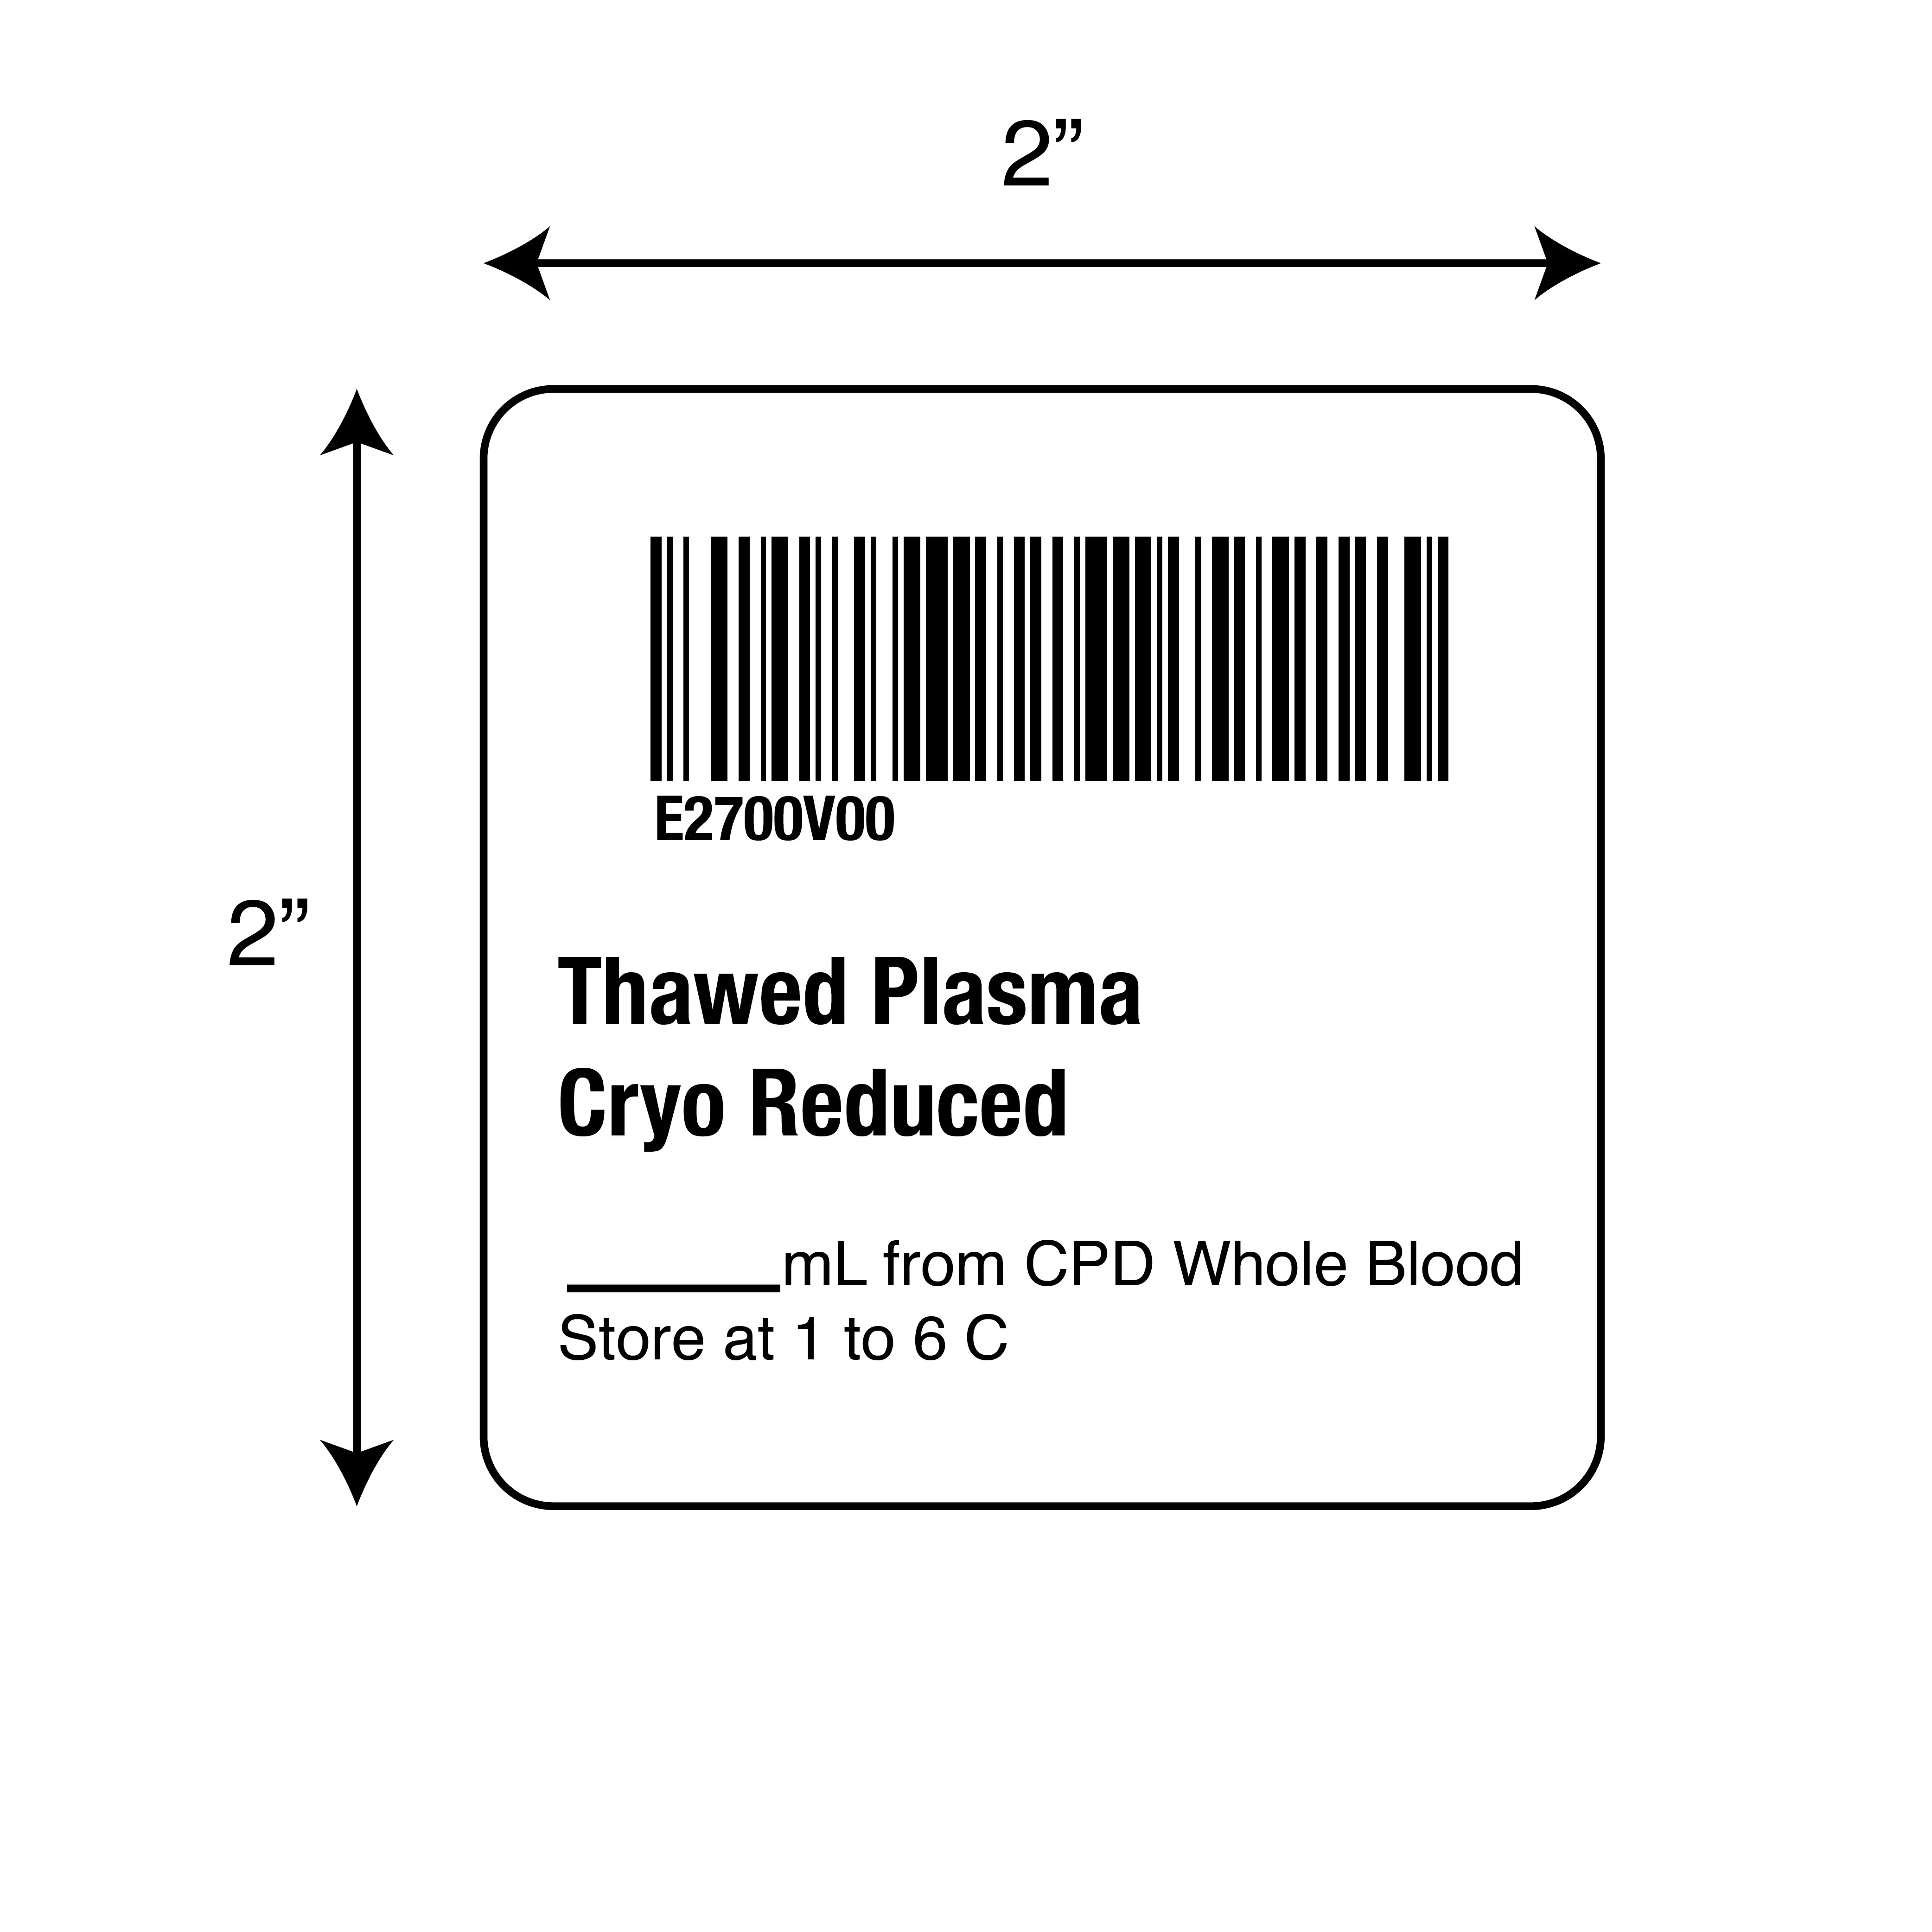 ISBT 128 Thawed Plasma Cryo Reduced